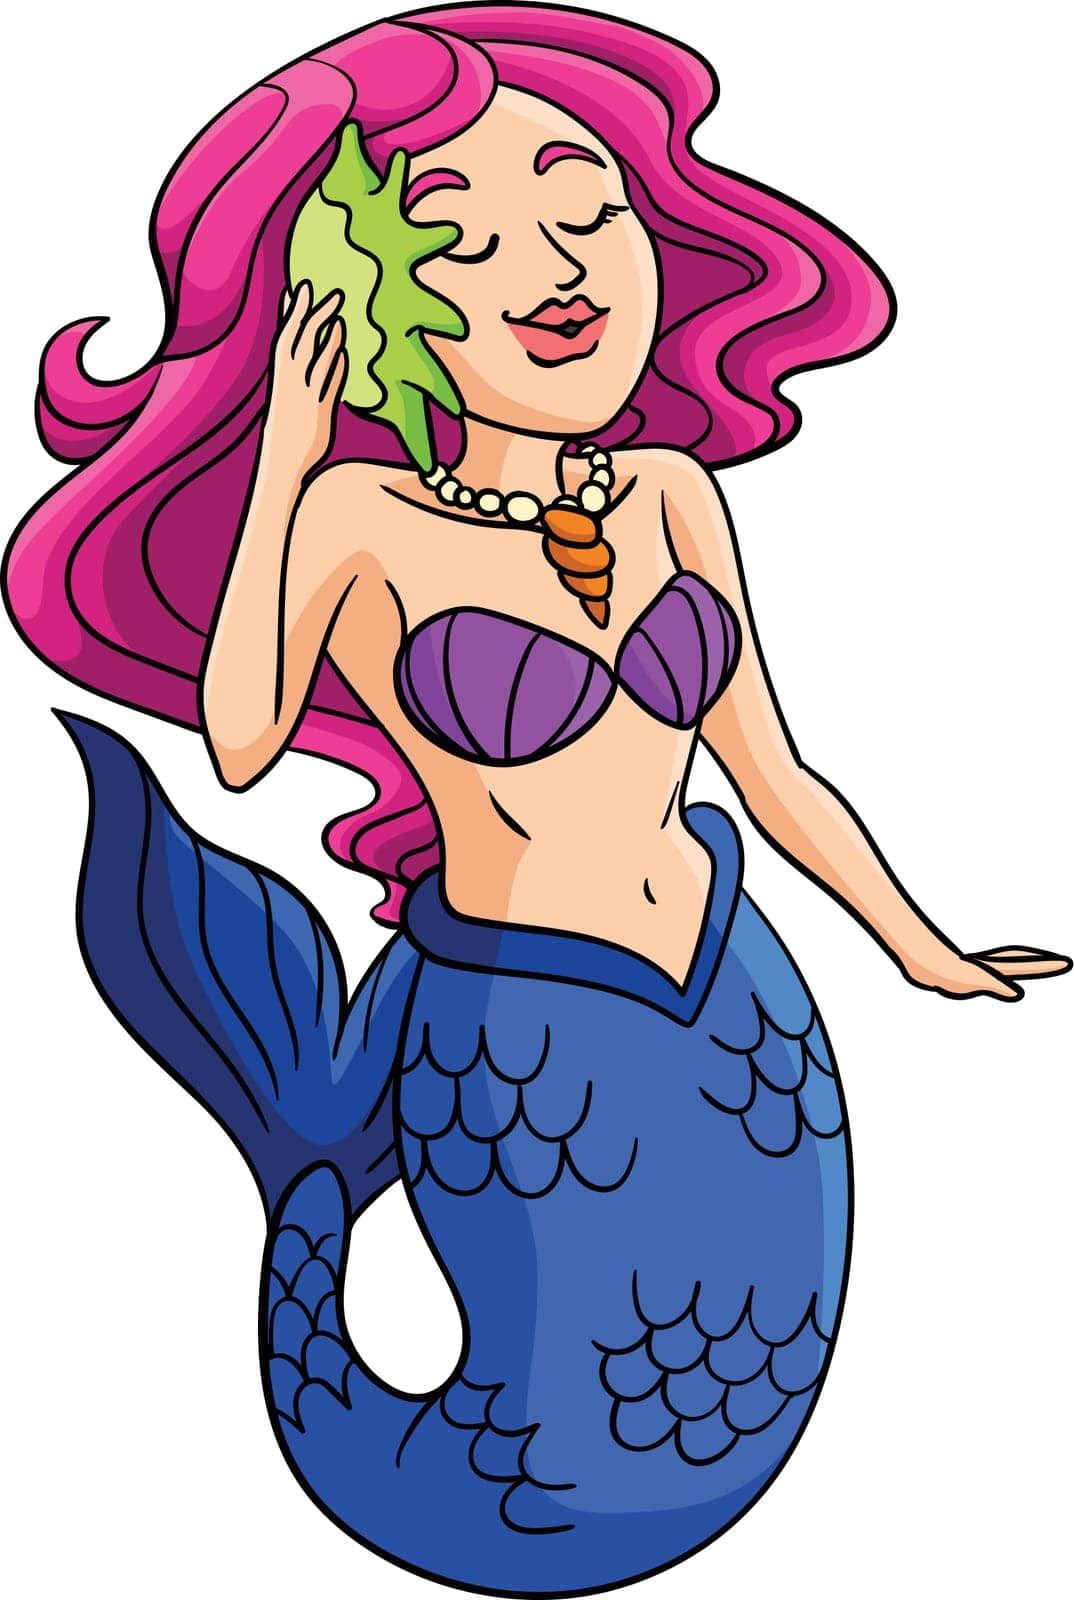 This cartoon clipart shows a Beautiful Mermaid illustration.